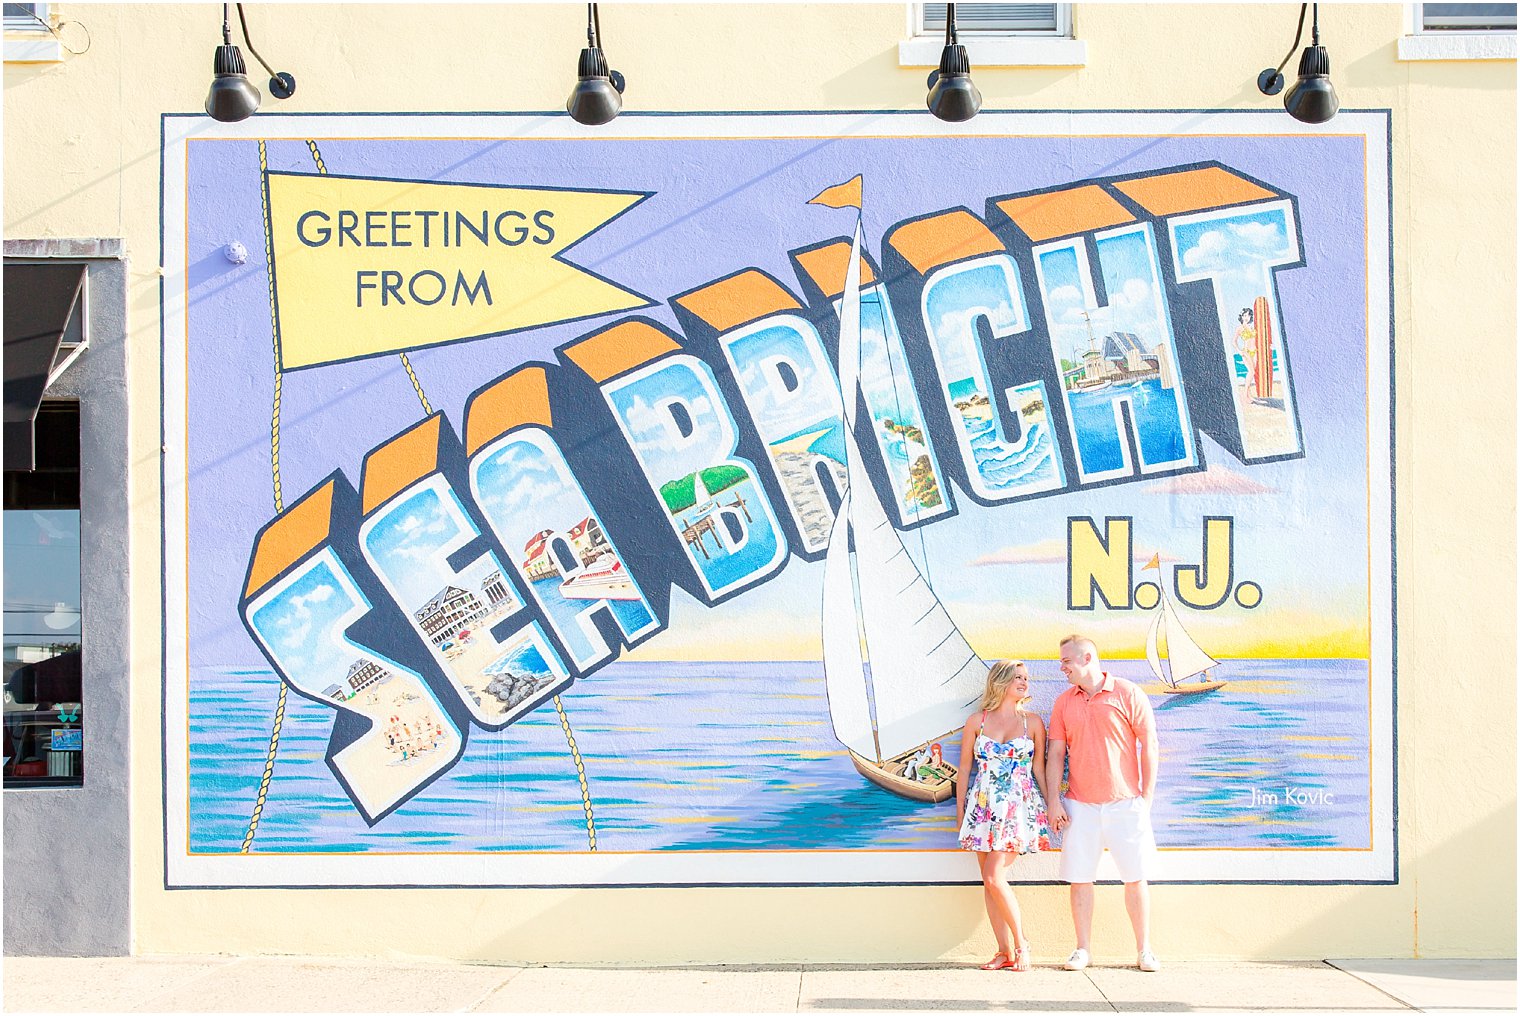 Greetings from Sea Bright NJ